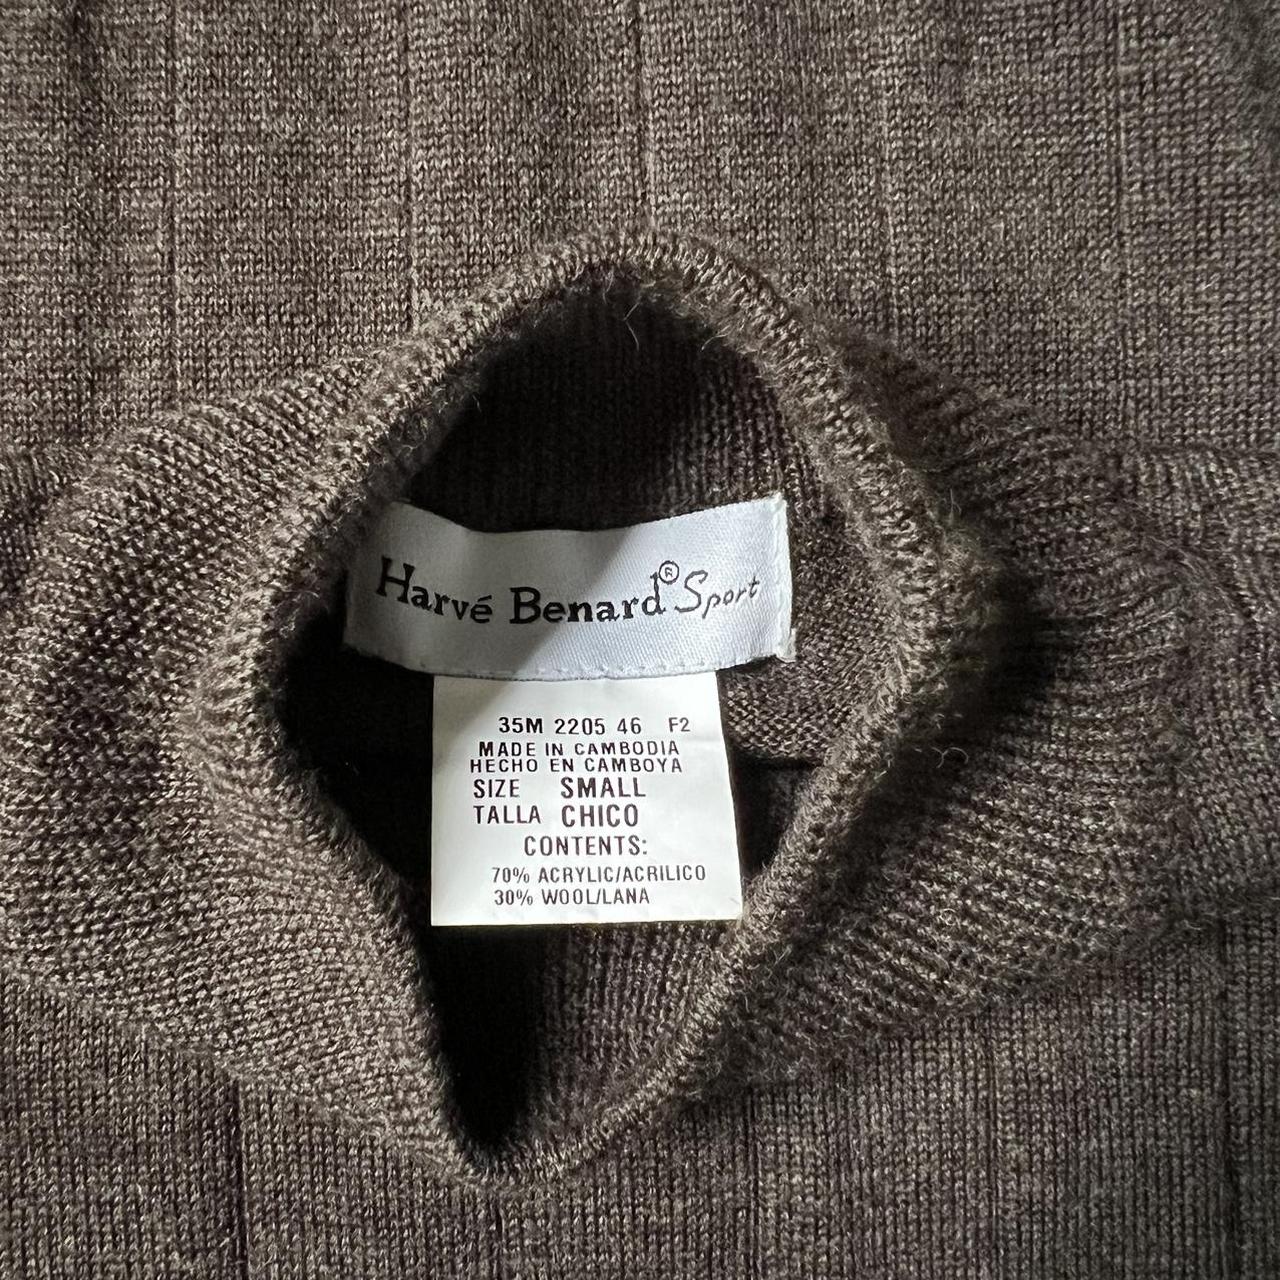 Harvé Benard knit sweater vest, chocolate brown, 30%...